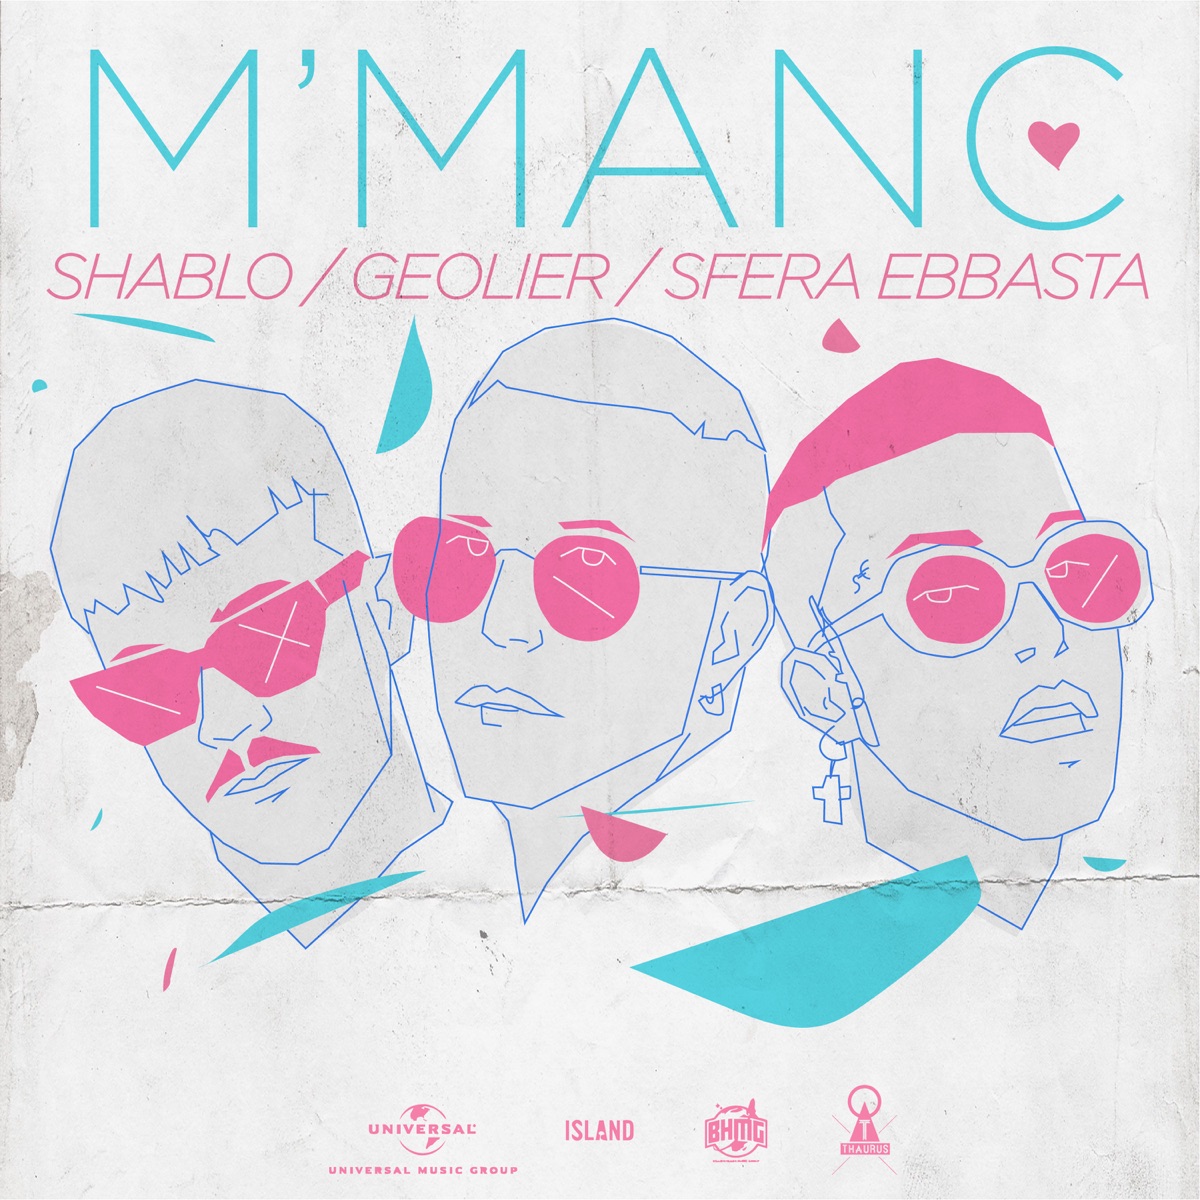 M' manc - Single - Album by Shablo, Geolier & Sfera Ebbasta - Apple Music